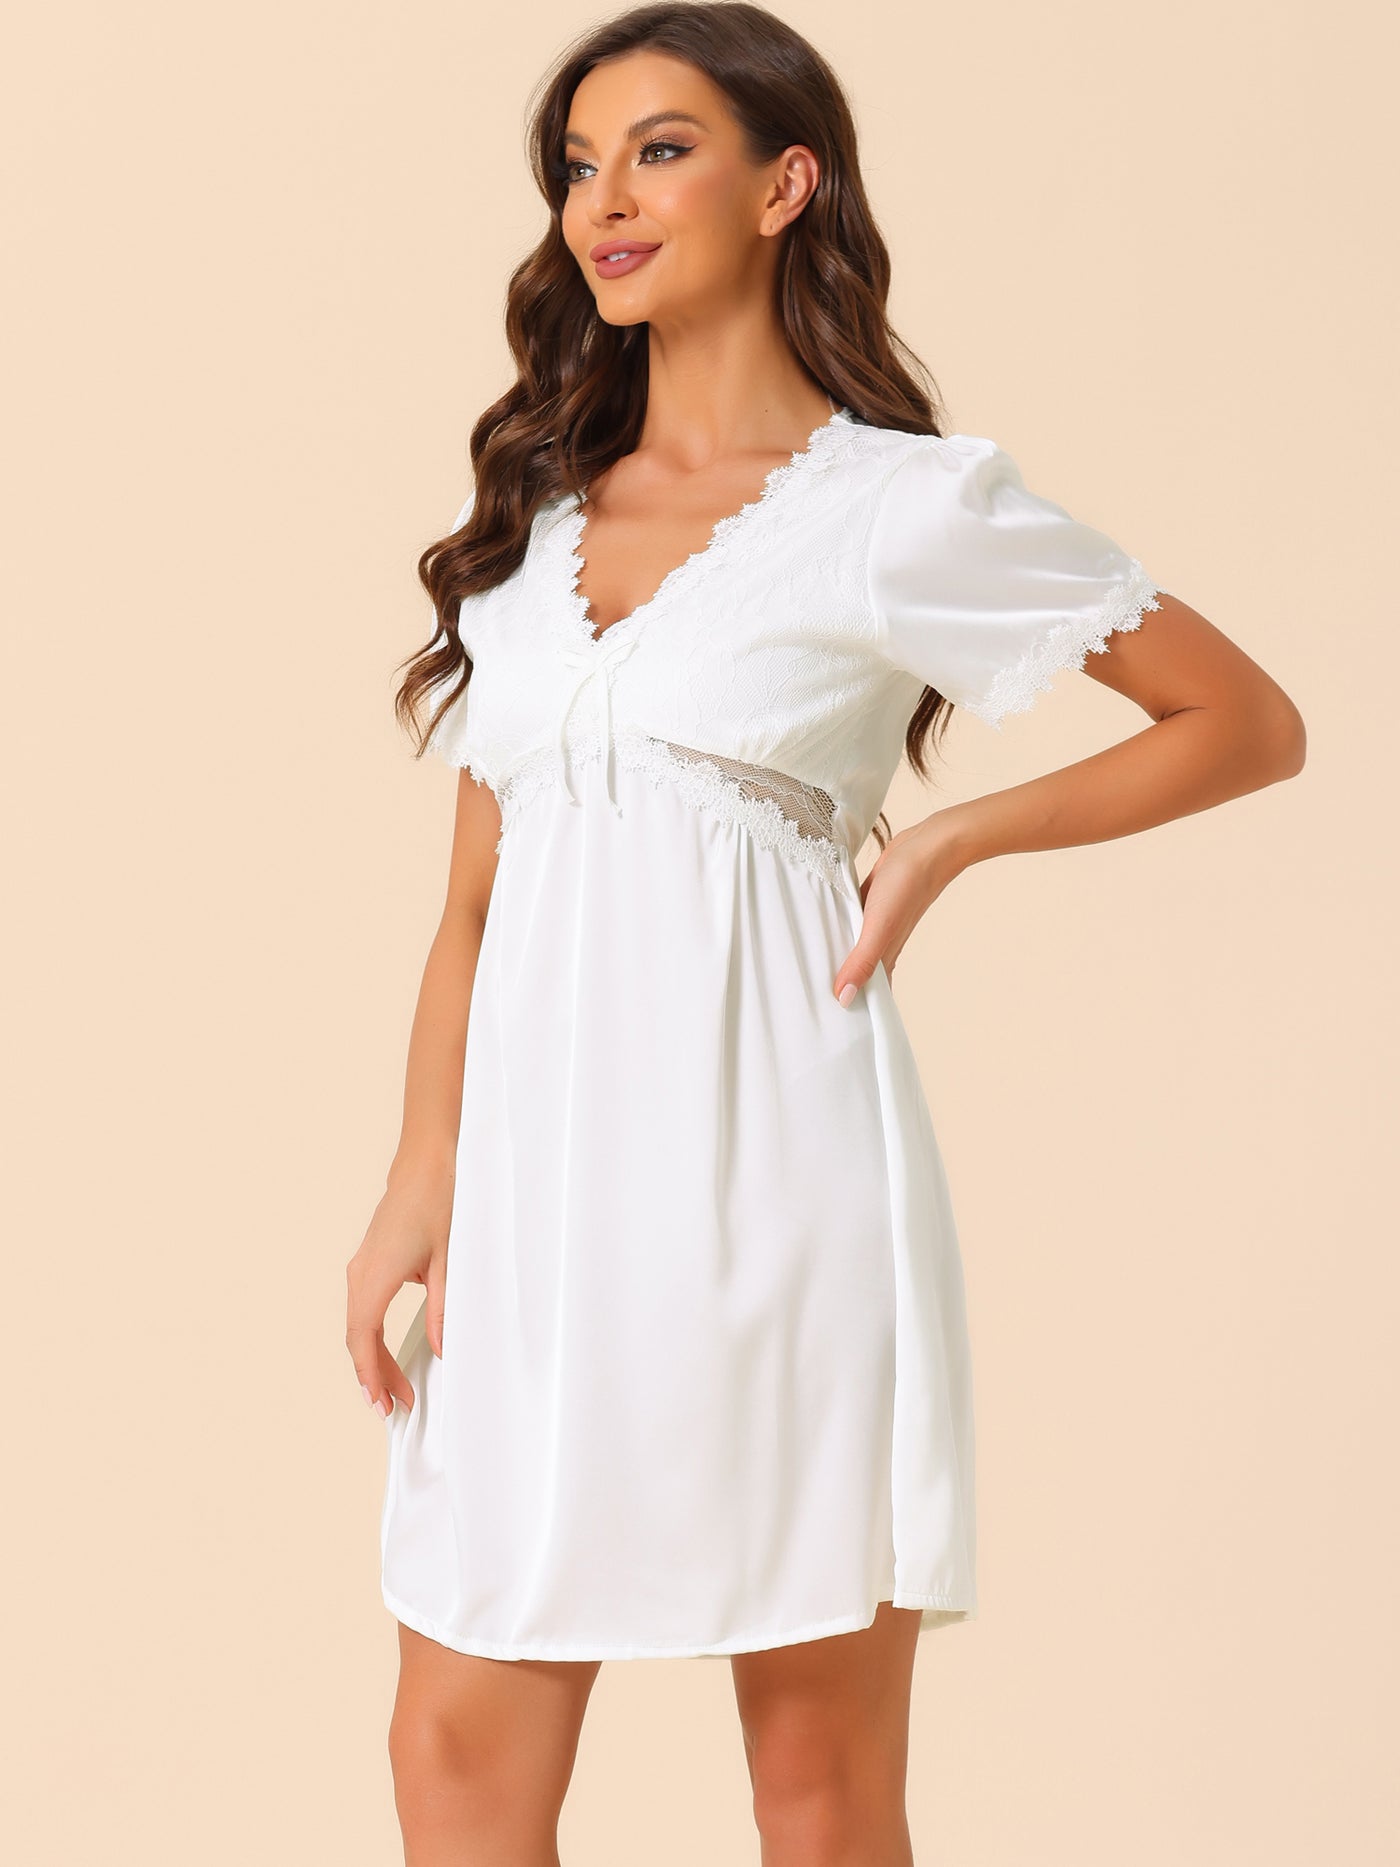 Bublédon Womens Pajamas Short Sleeves V Neck Sleepwear Lace Trim Lounge Nightgowns